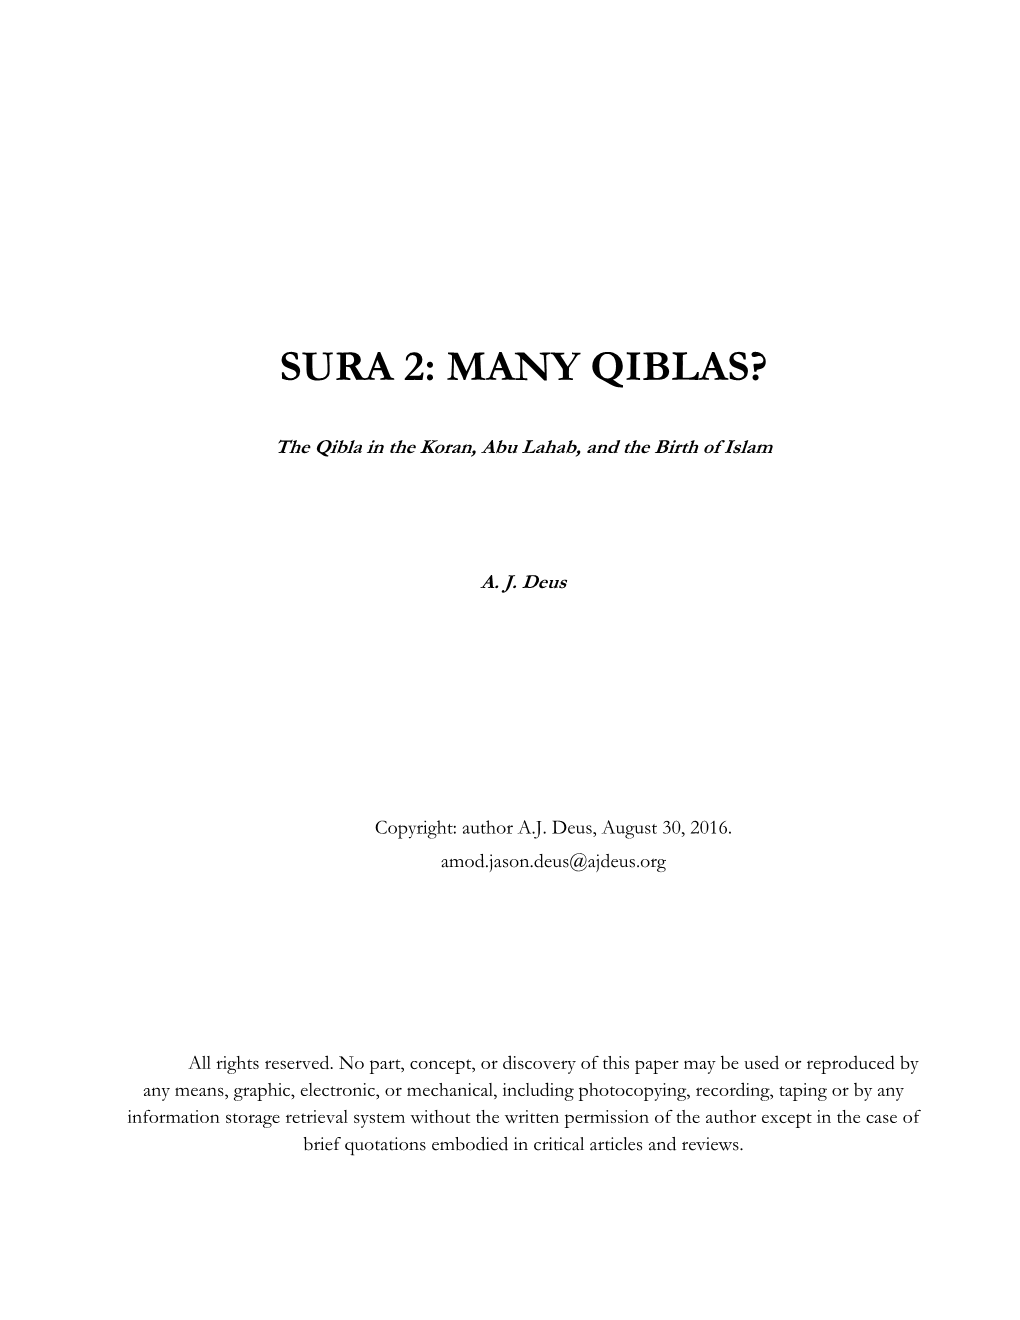 Sura 2: Many Qiblas?